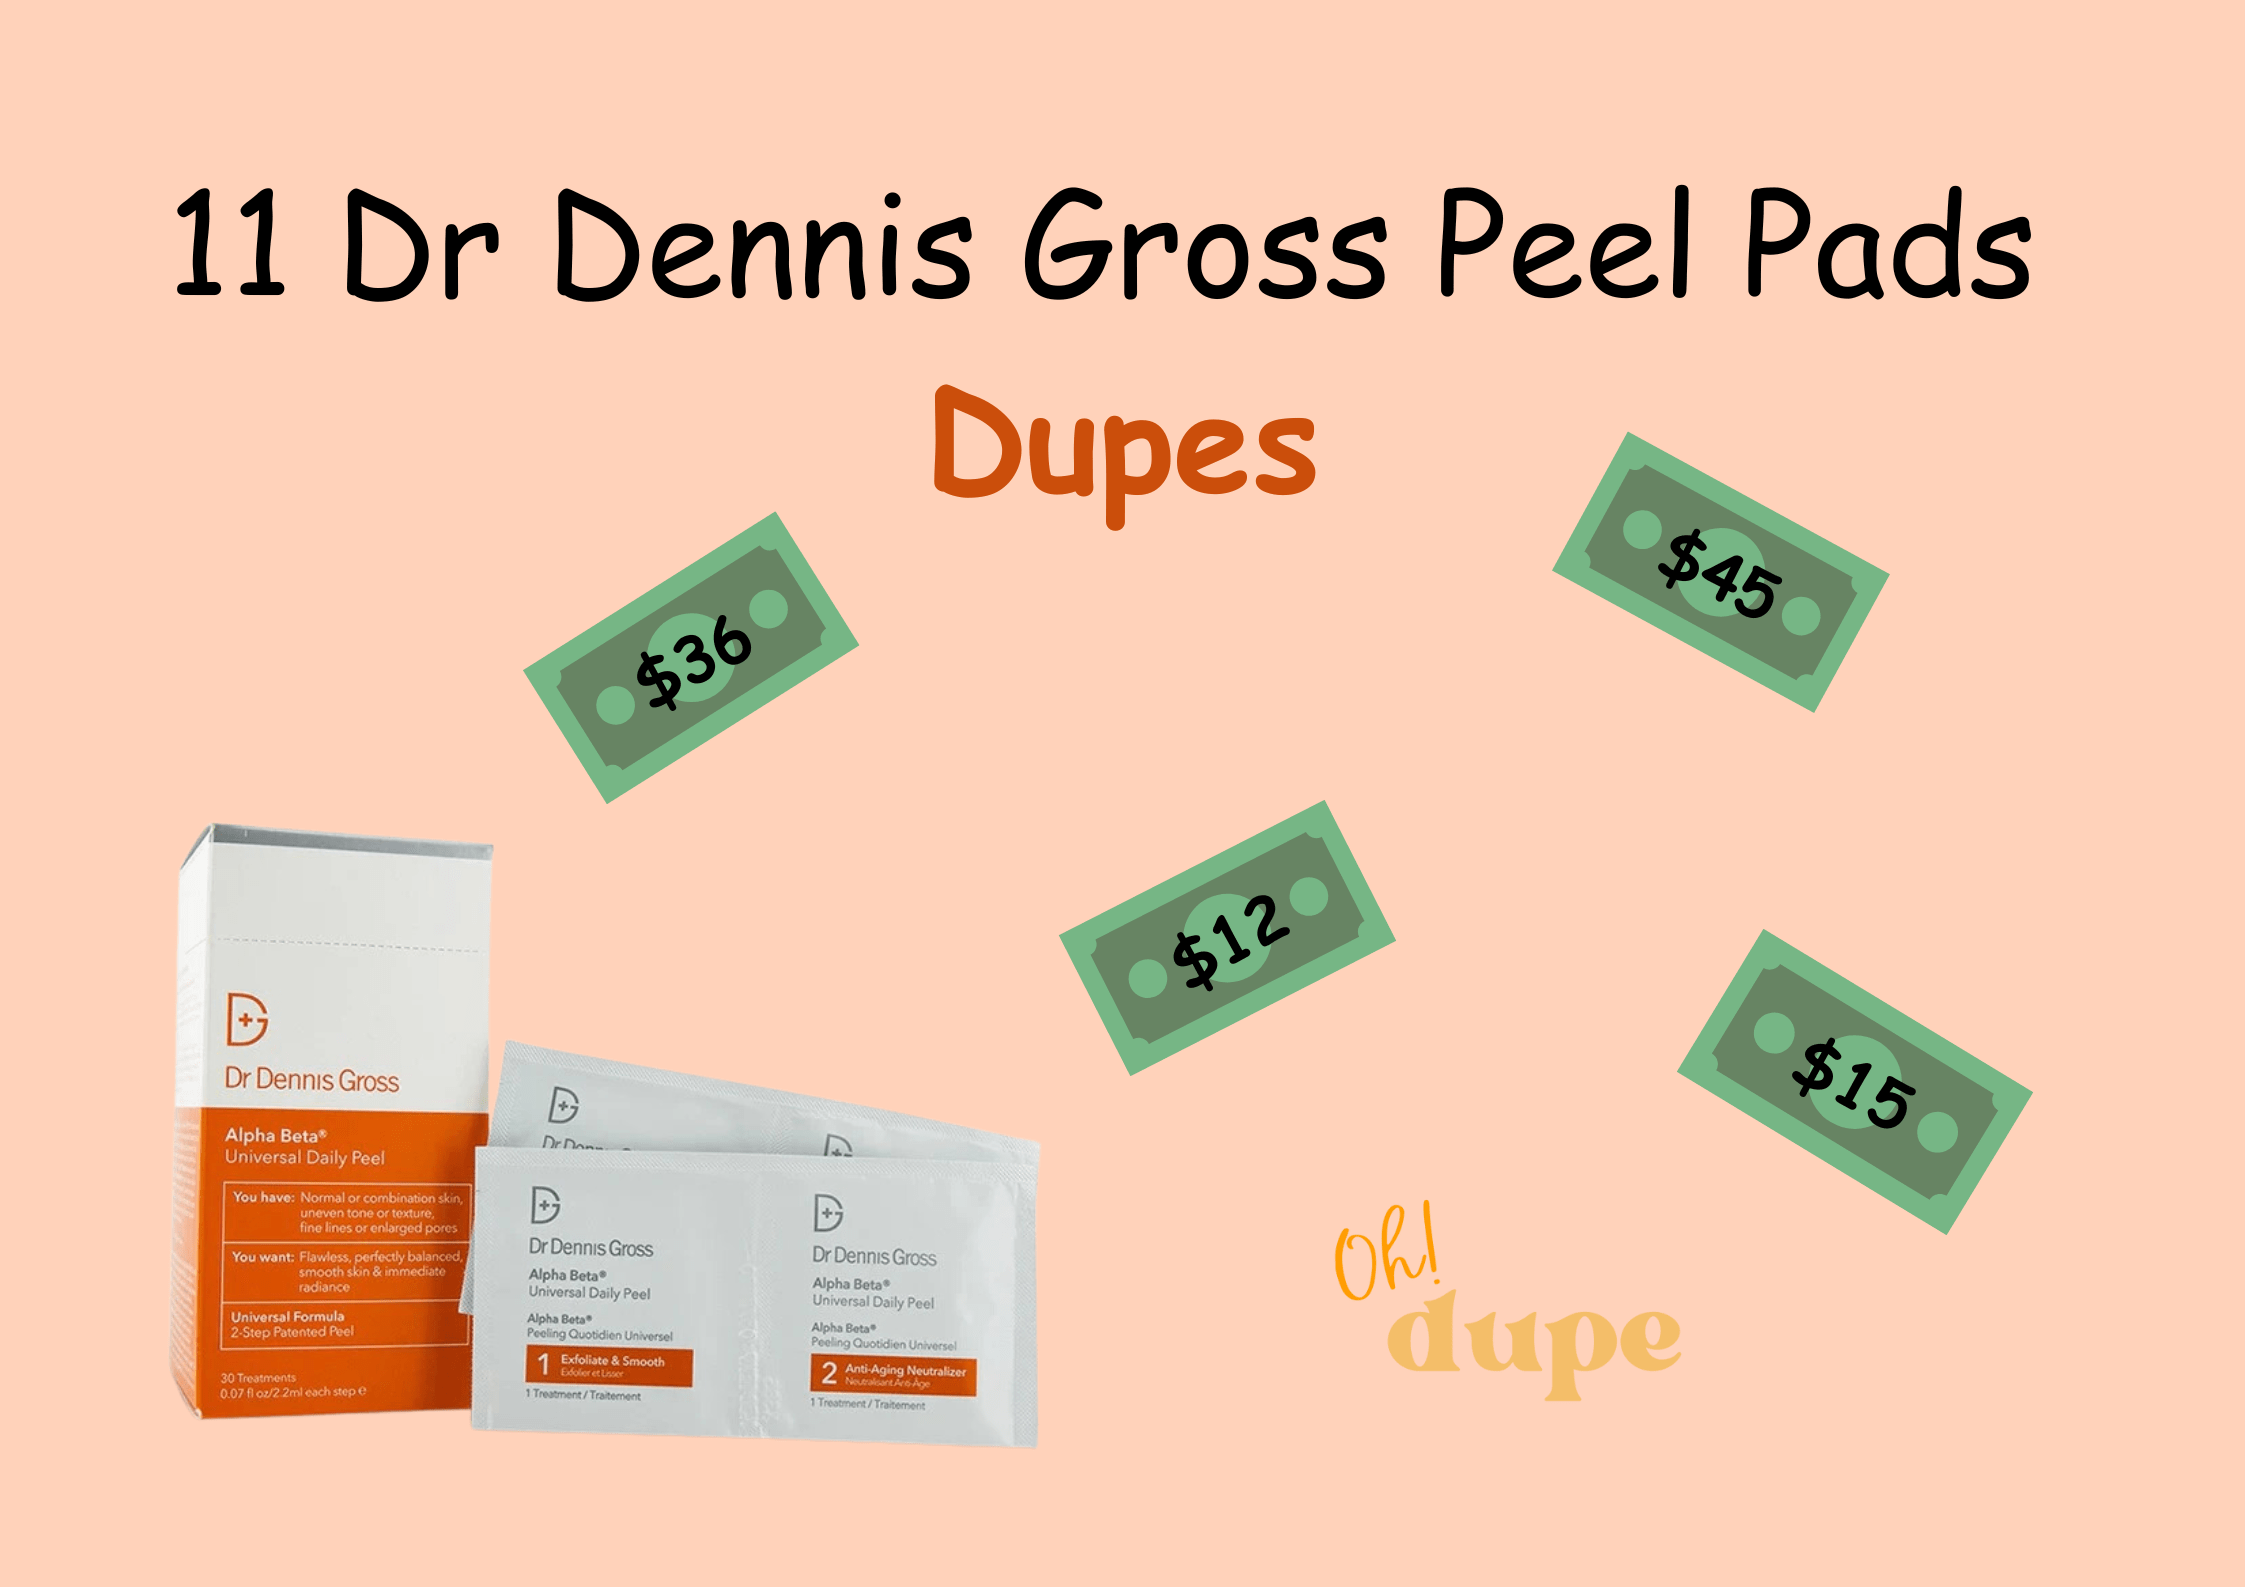 Dr Dennis Gross Peel Pads Dupe